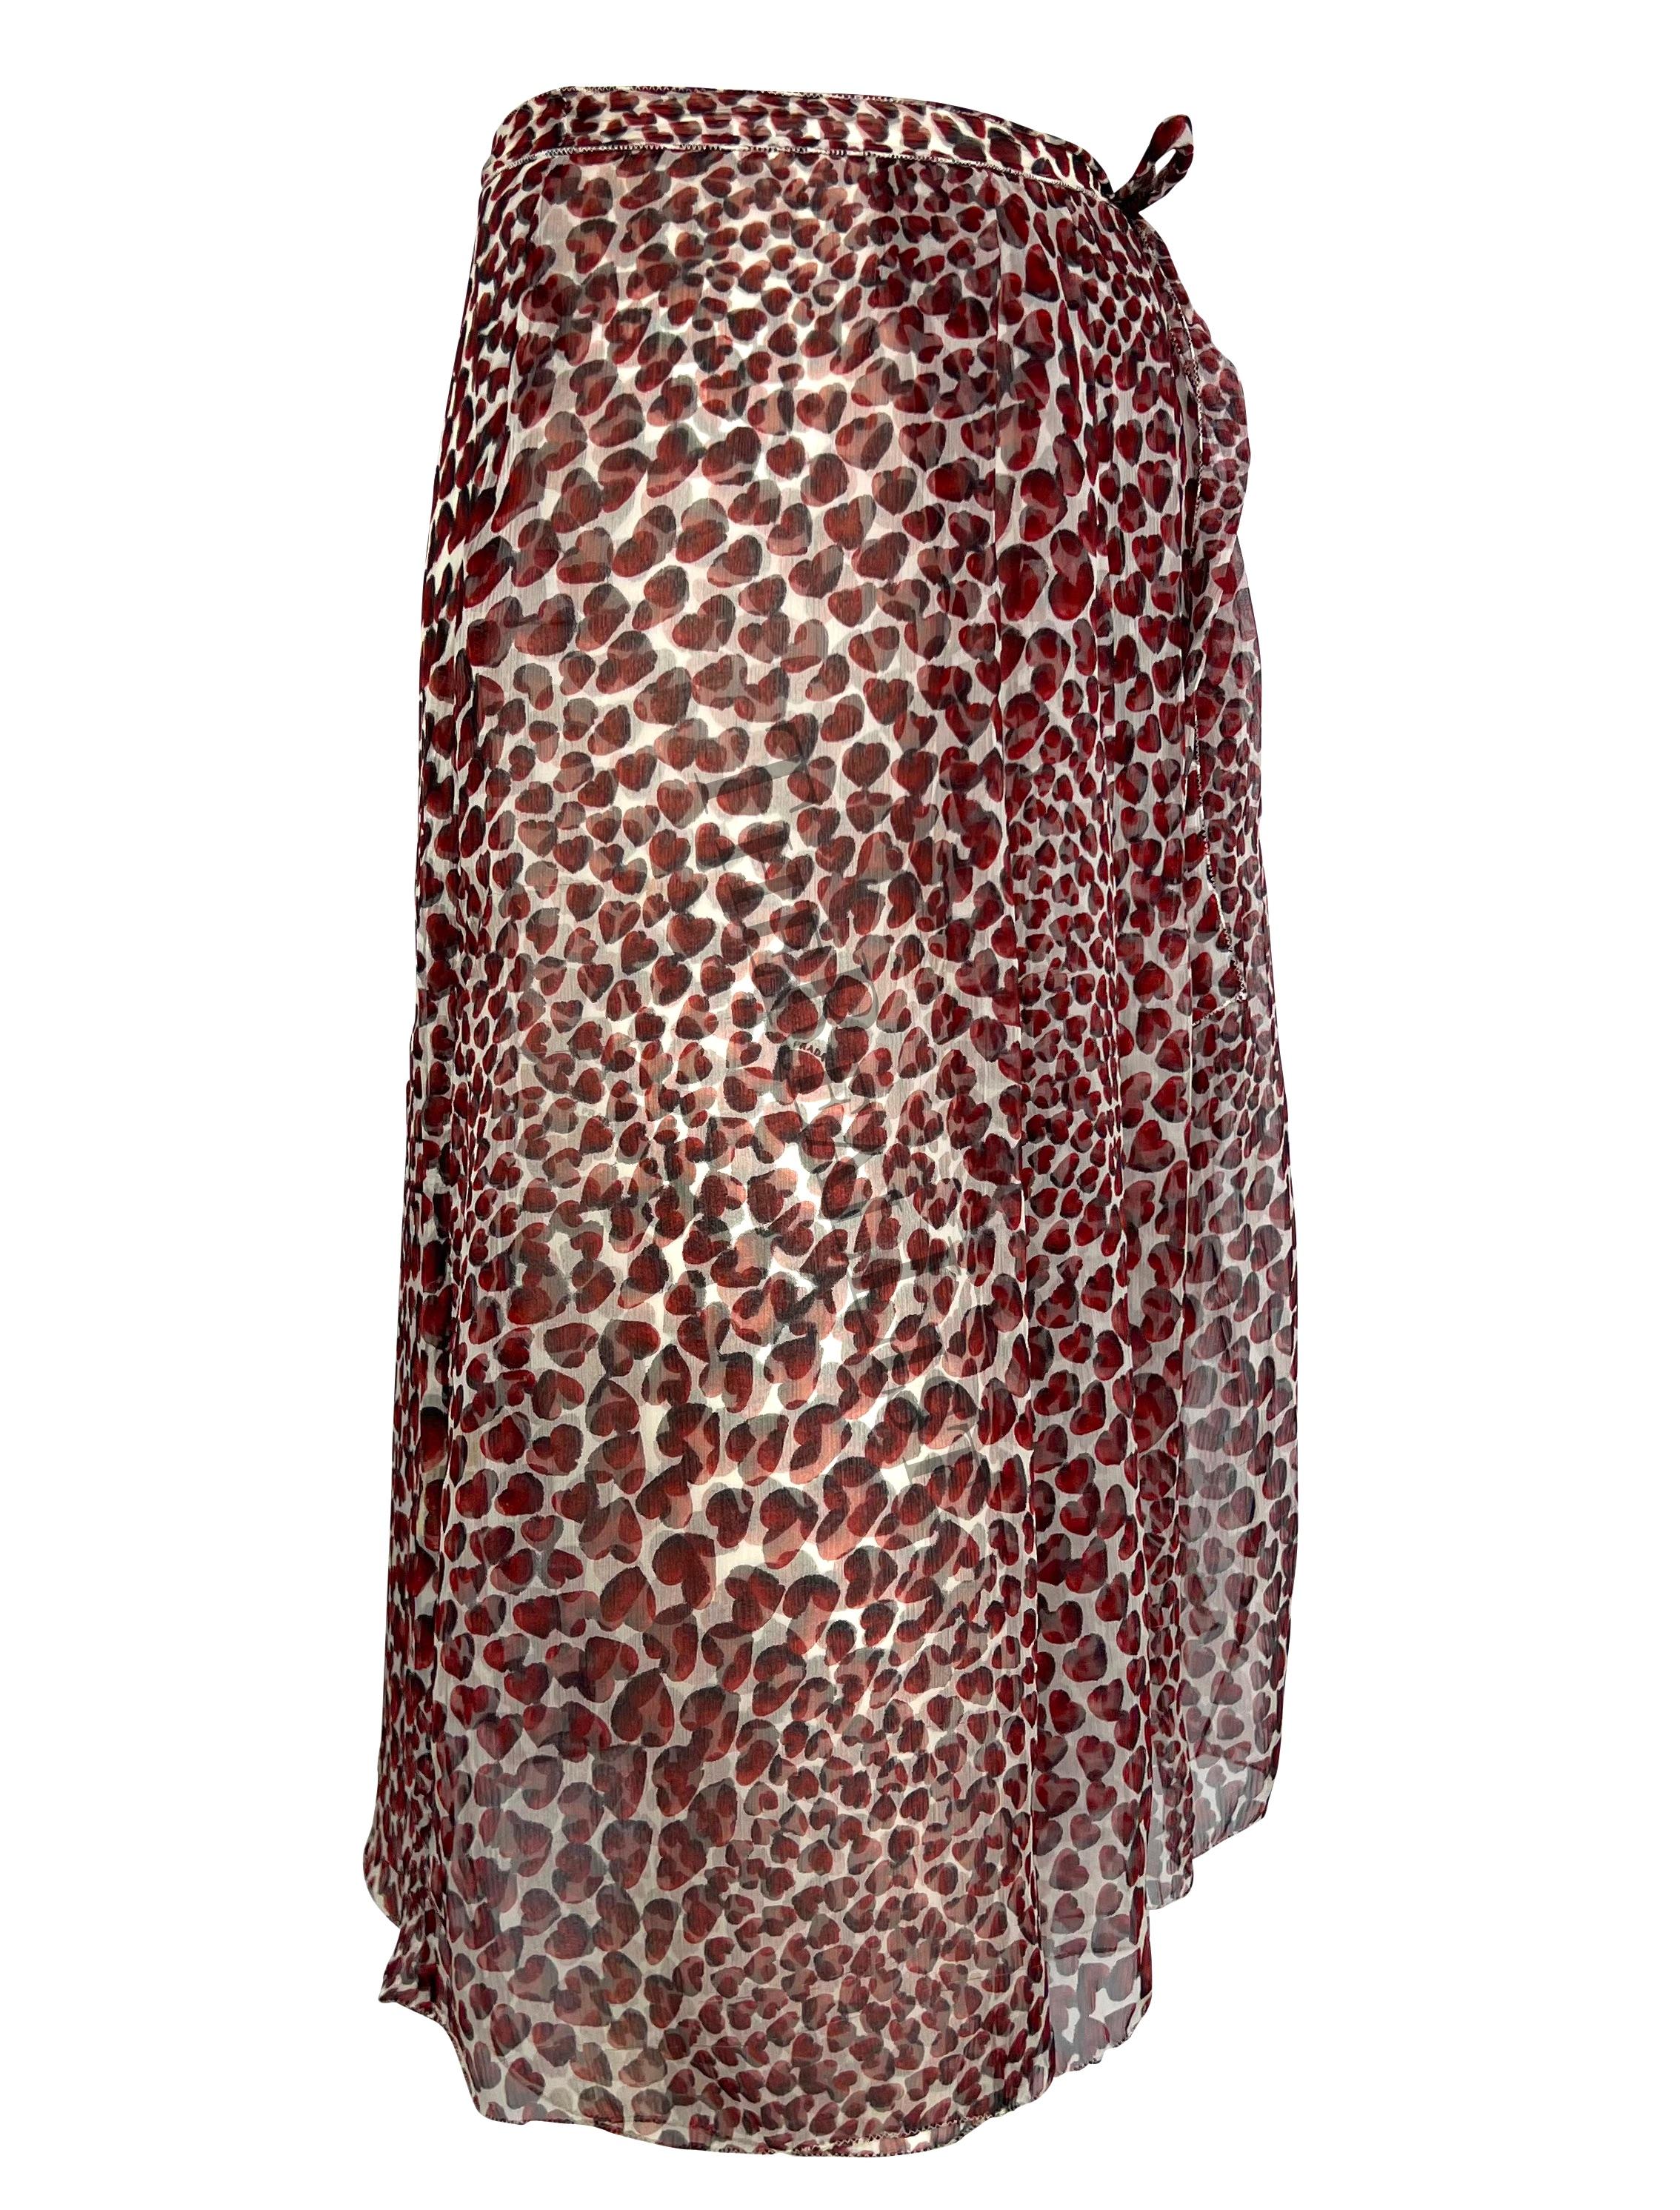 S/S 2000 Prada by Miuccia Semi-Sheer Heart Print Chiffon Wrap Skirt For Sale 3